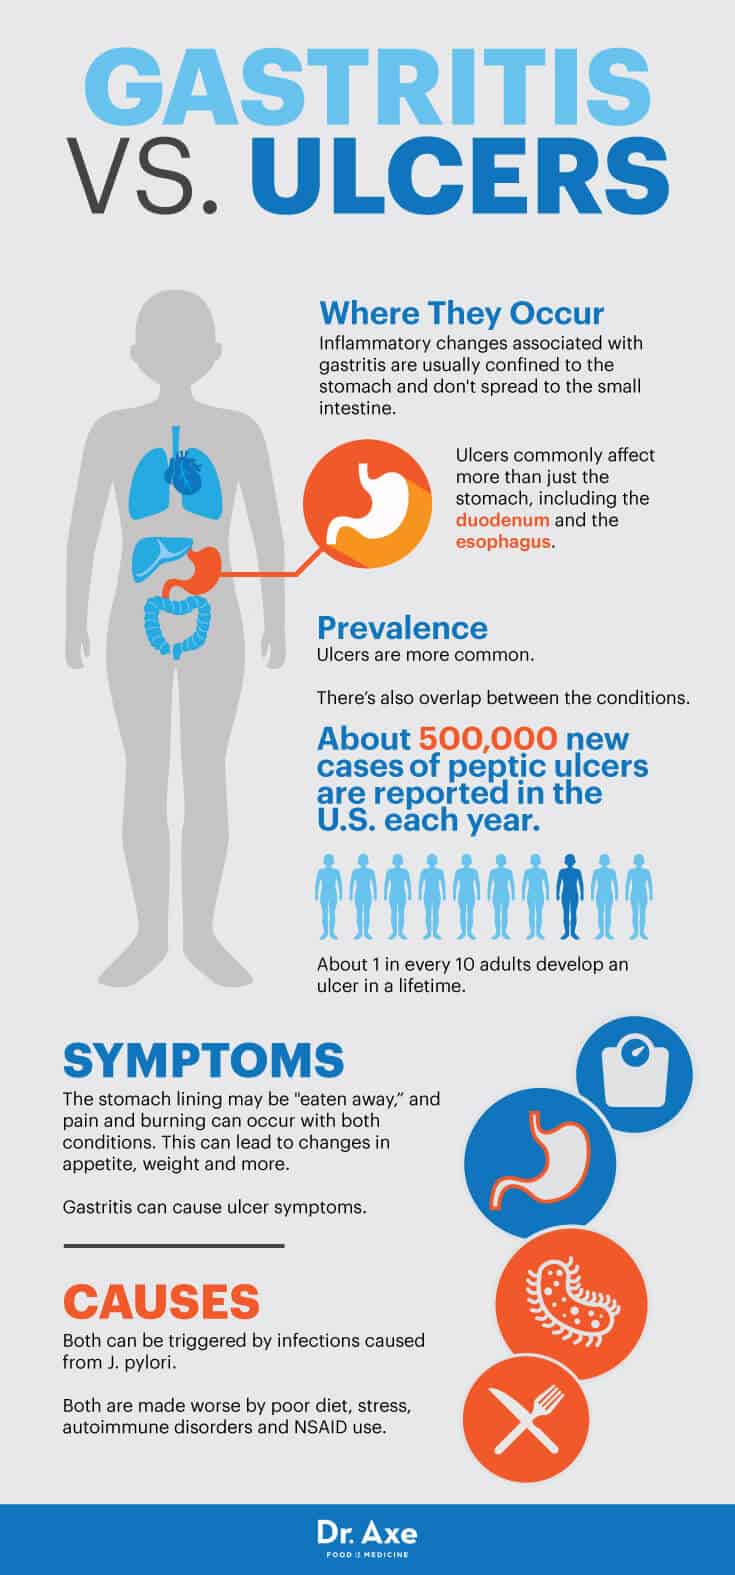 Gastritis vs. ulcers - Dr. Axe